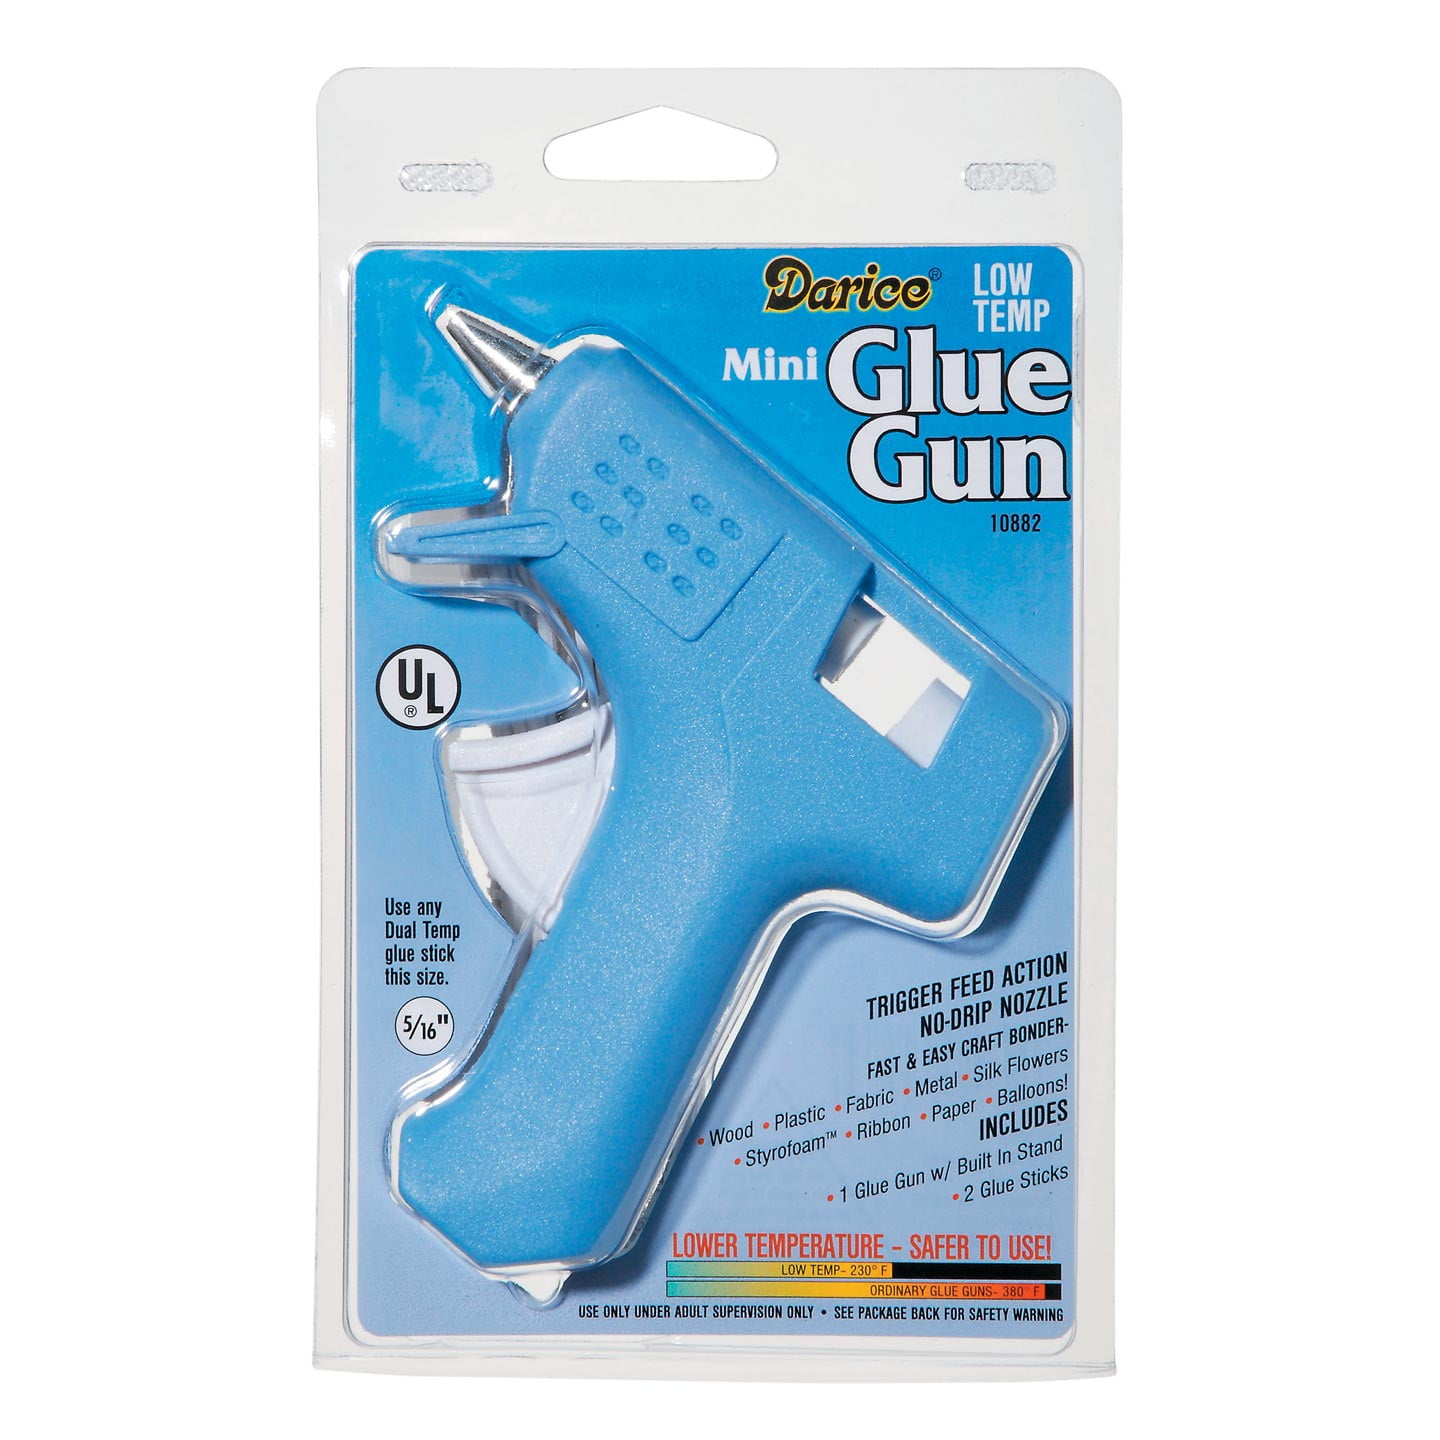 *Darice Low Temp Mini Glue Gun